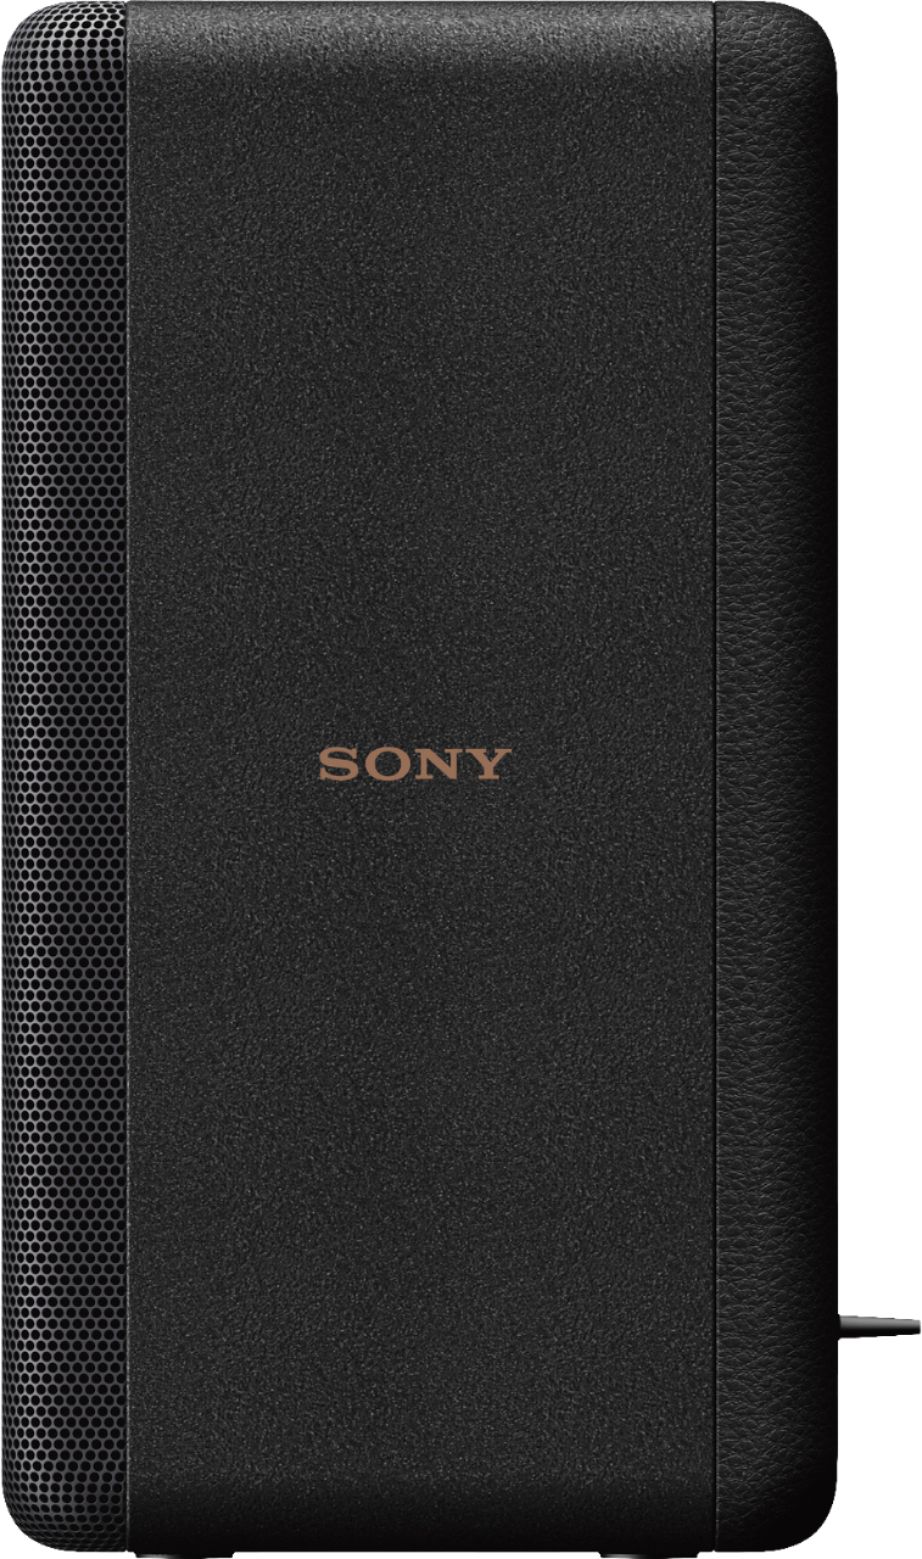 Sony SA-RS3S Wireless Rear Speaker Black SARS3S - Best Buy